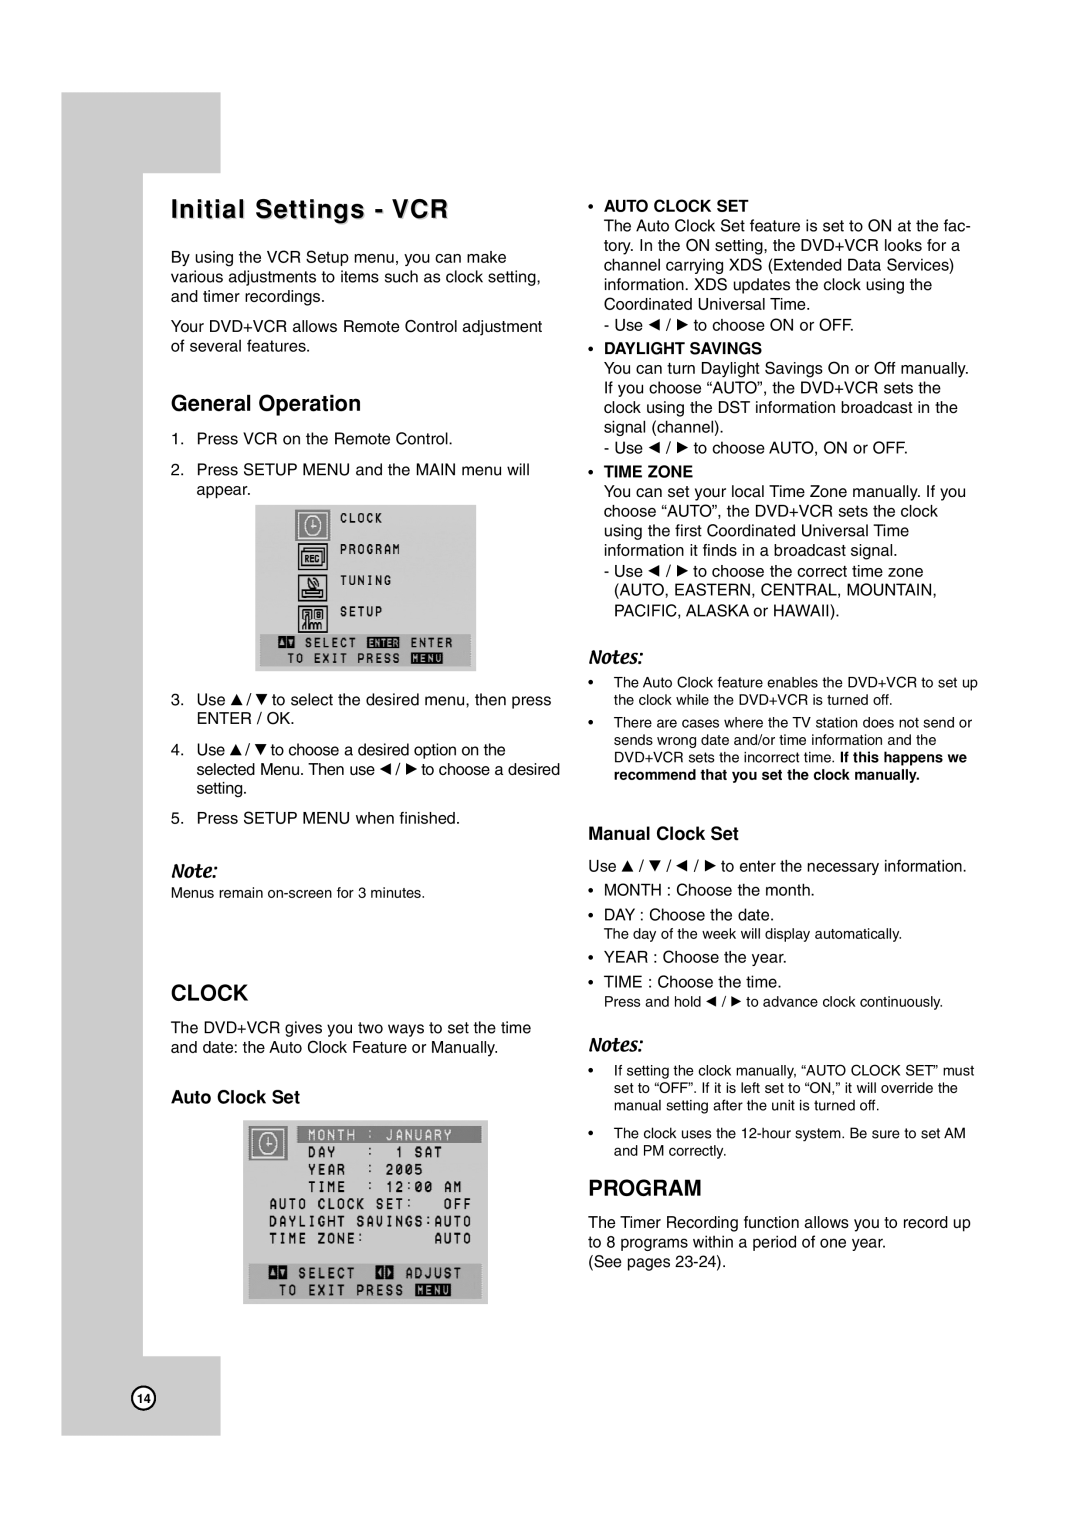 JVC HR-XVC17SU manual Initial Settings VCR, General Operation, Clock, Program 